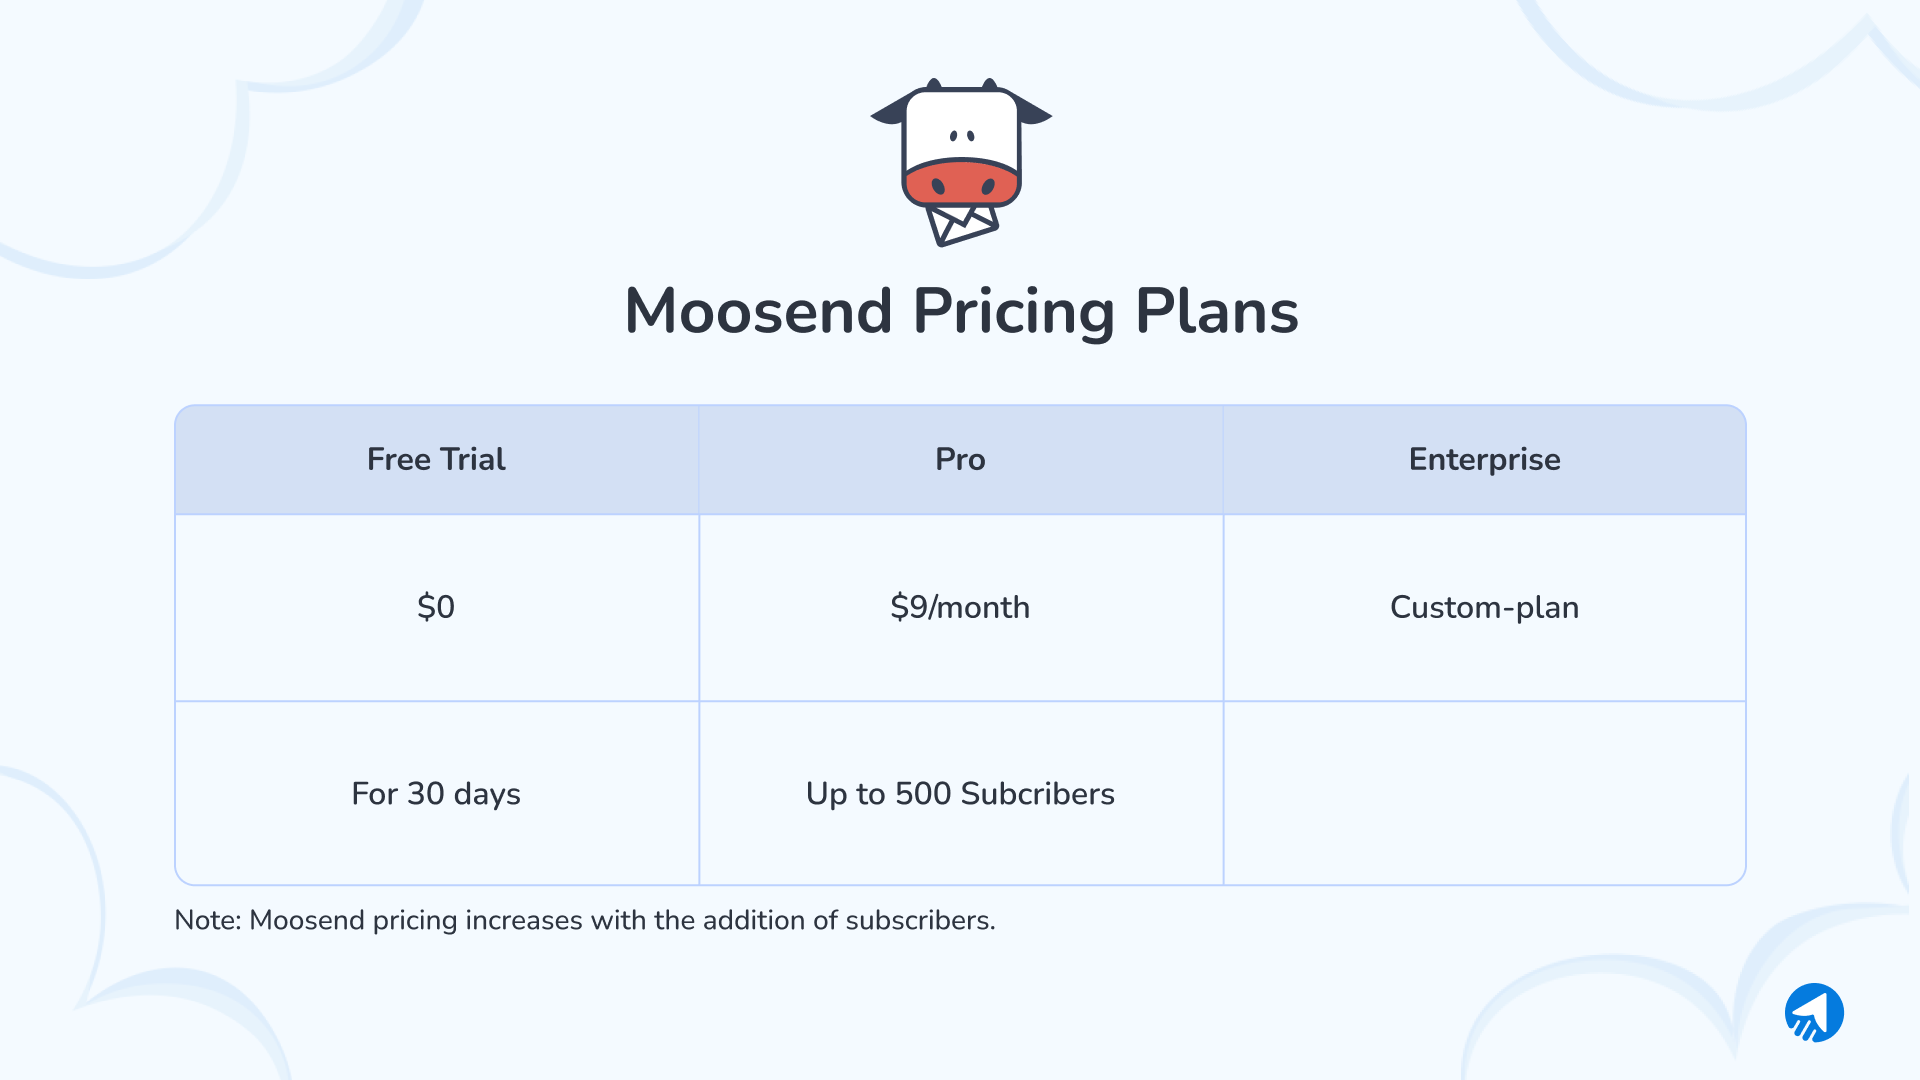 Moosend pricing plans.